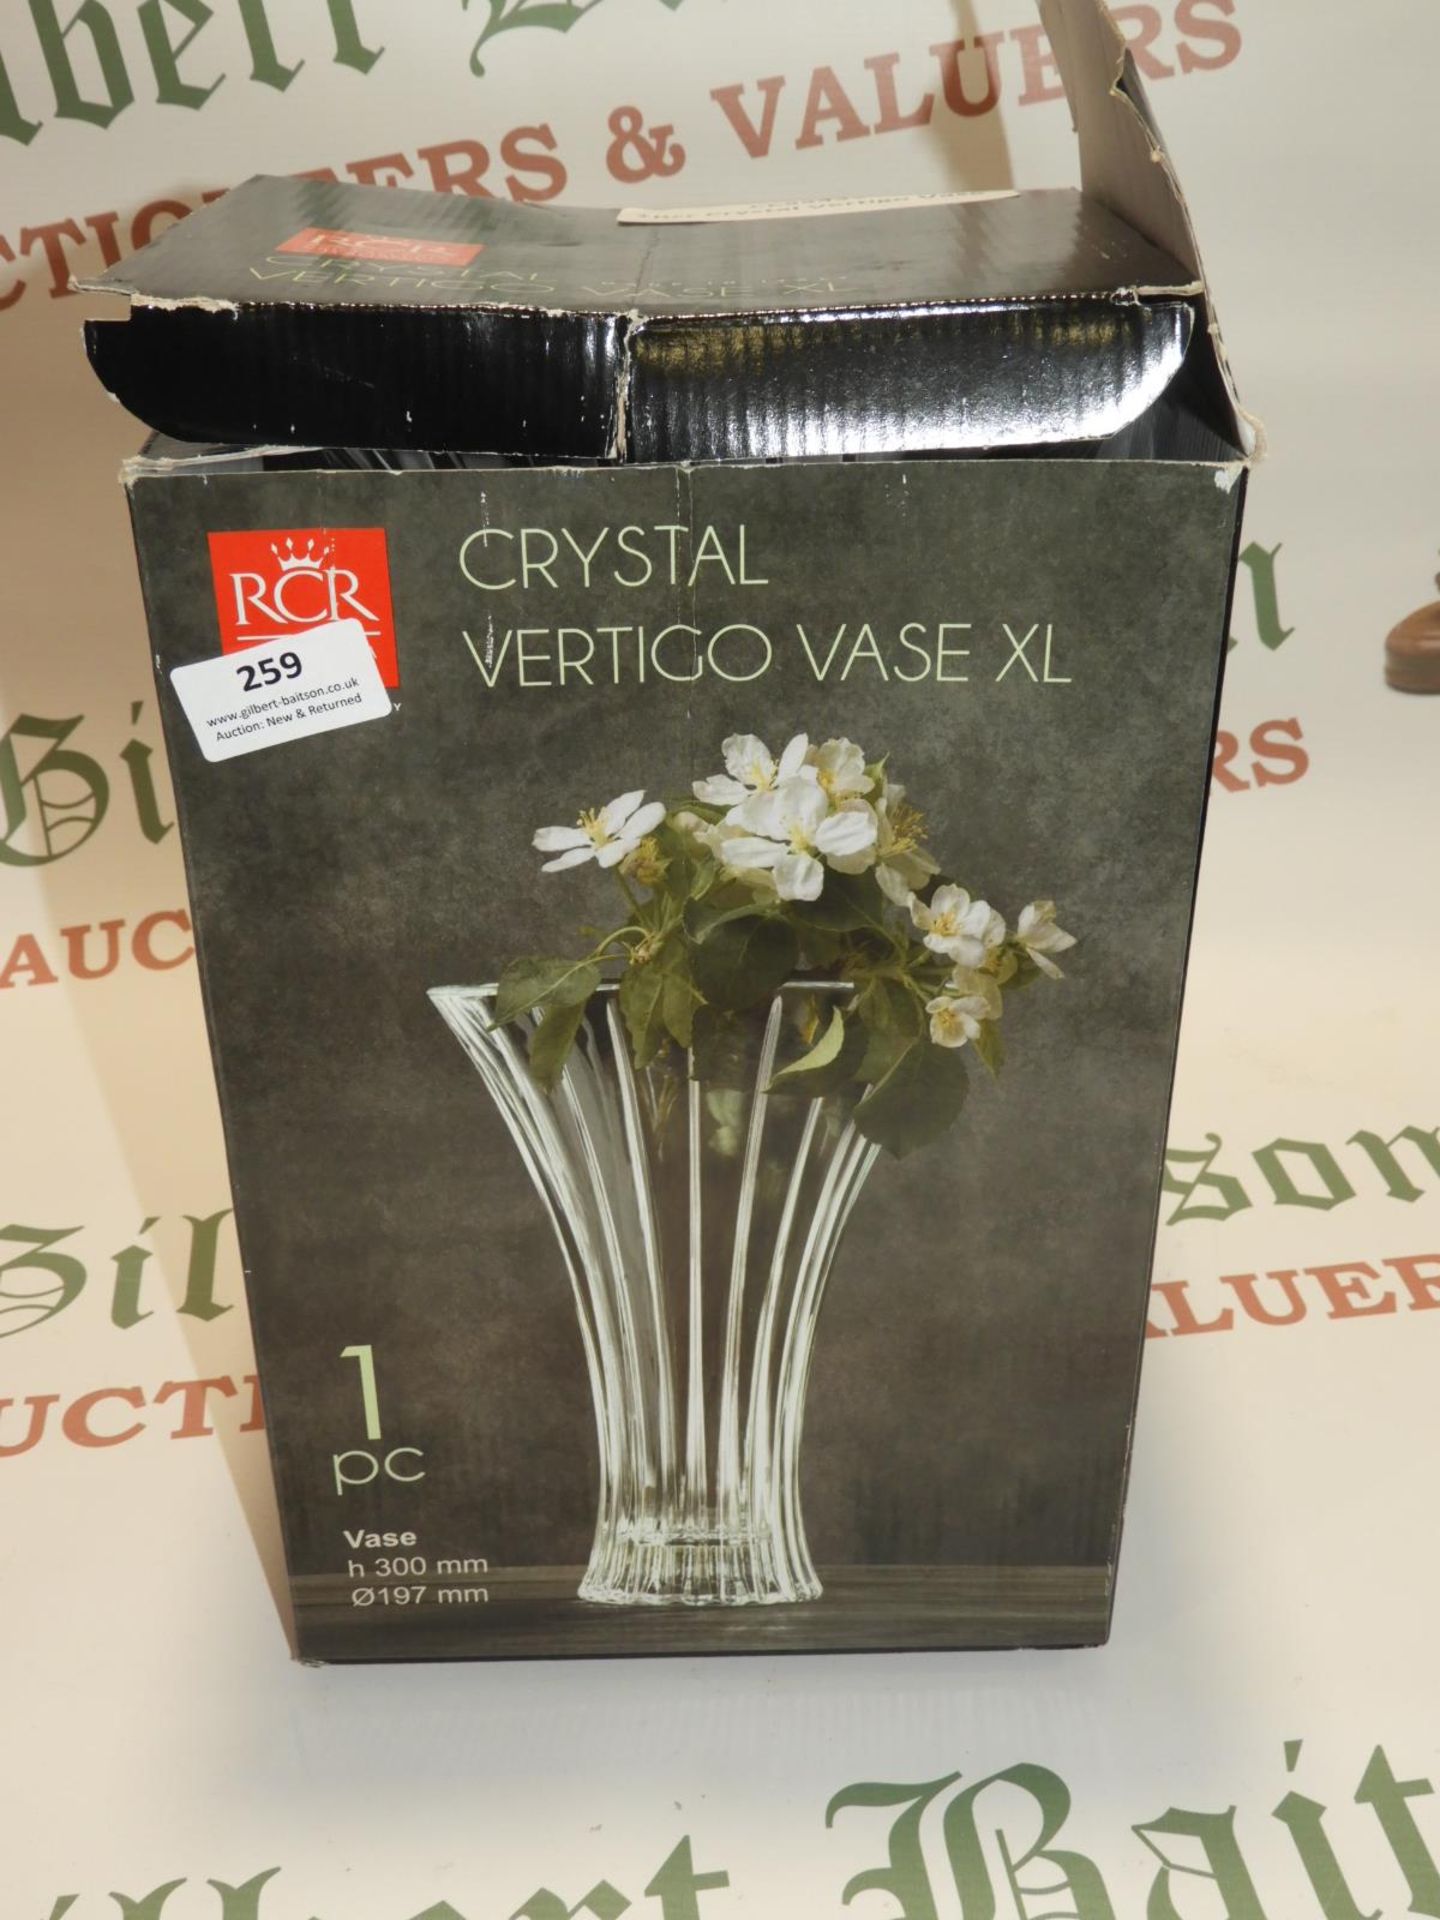 *RCR Crystal Vertigo Vase